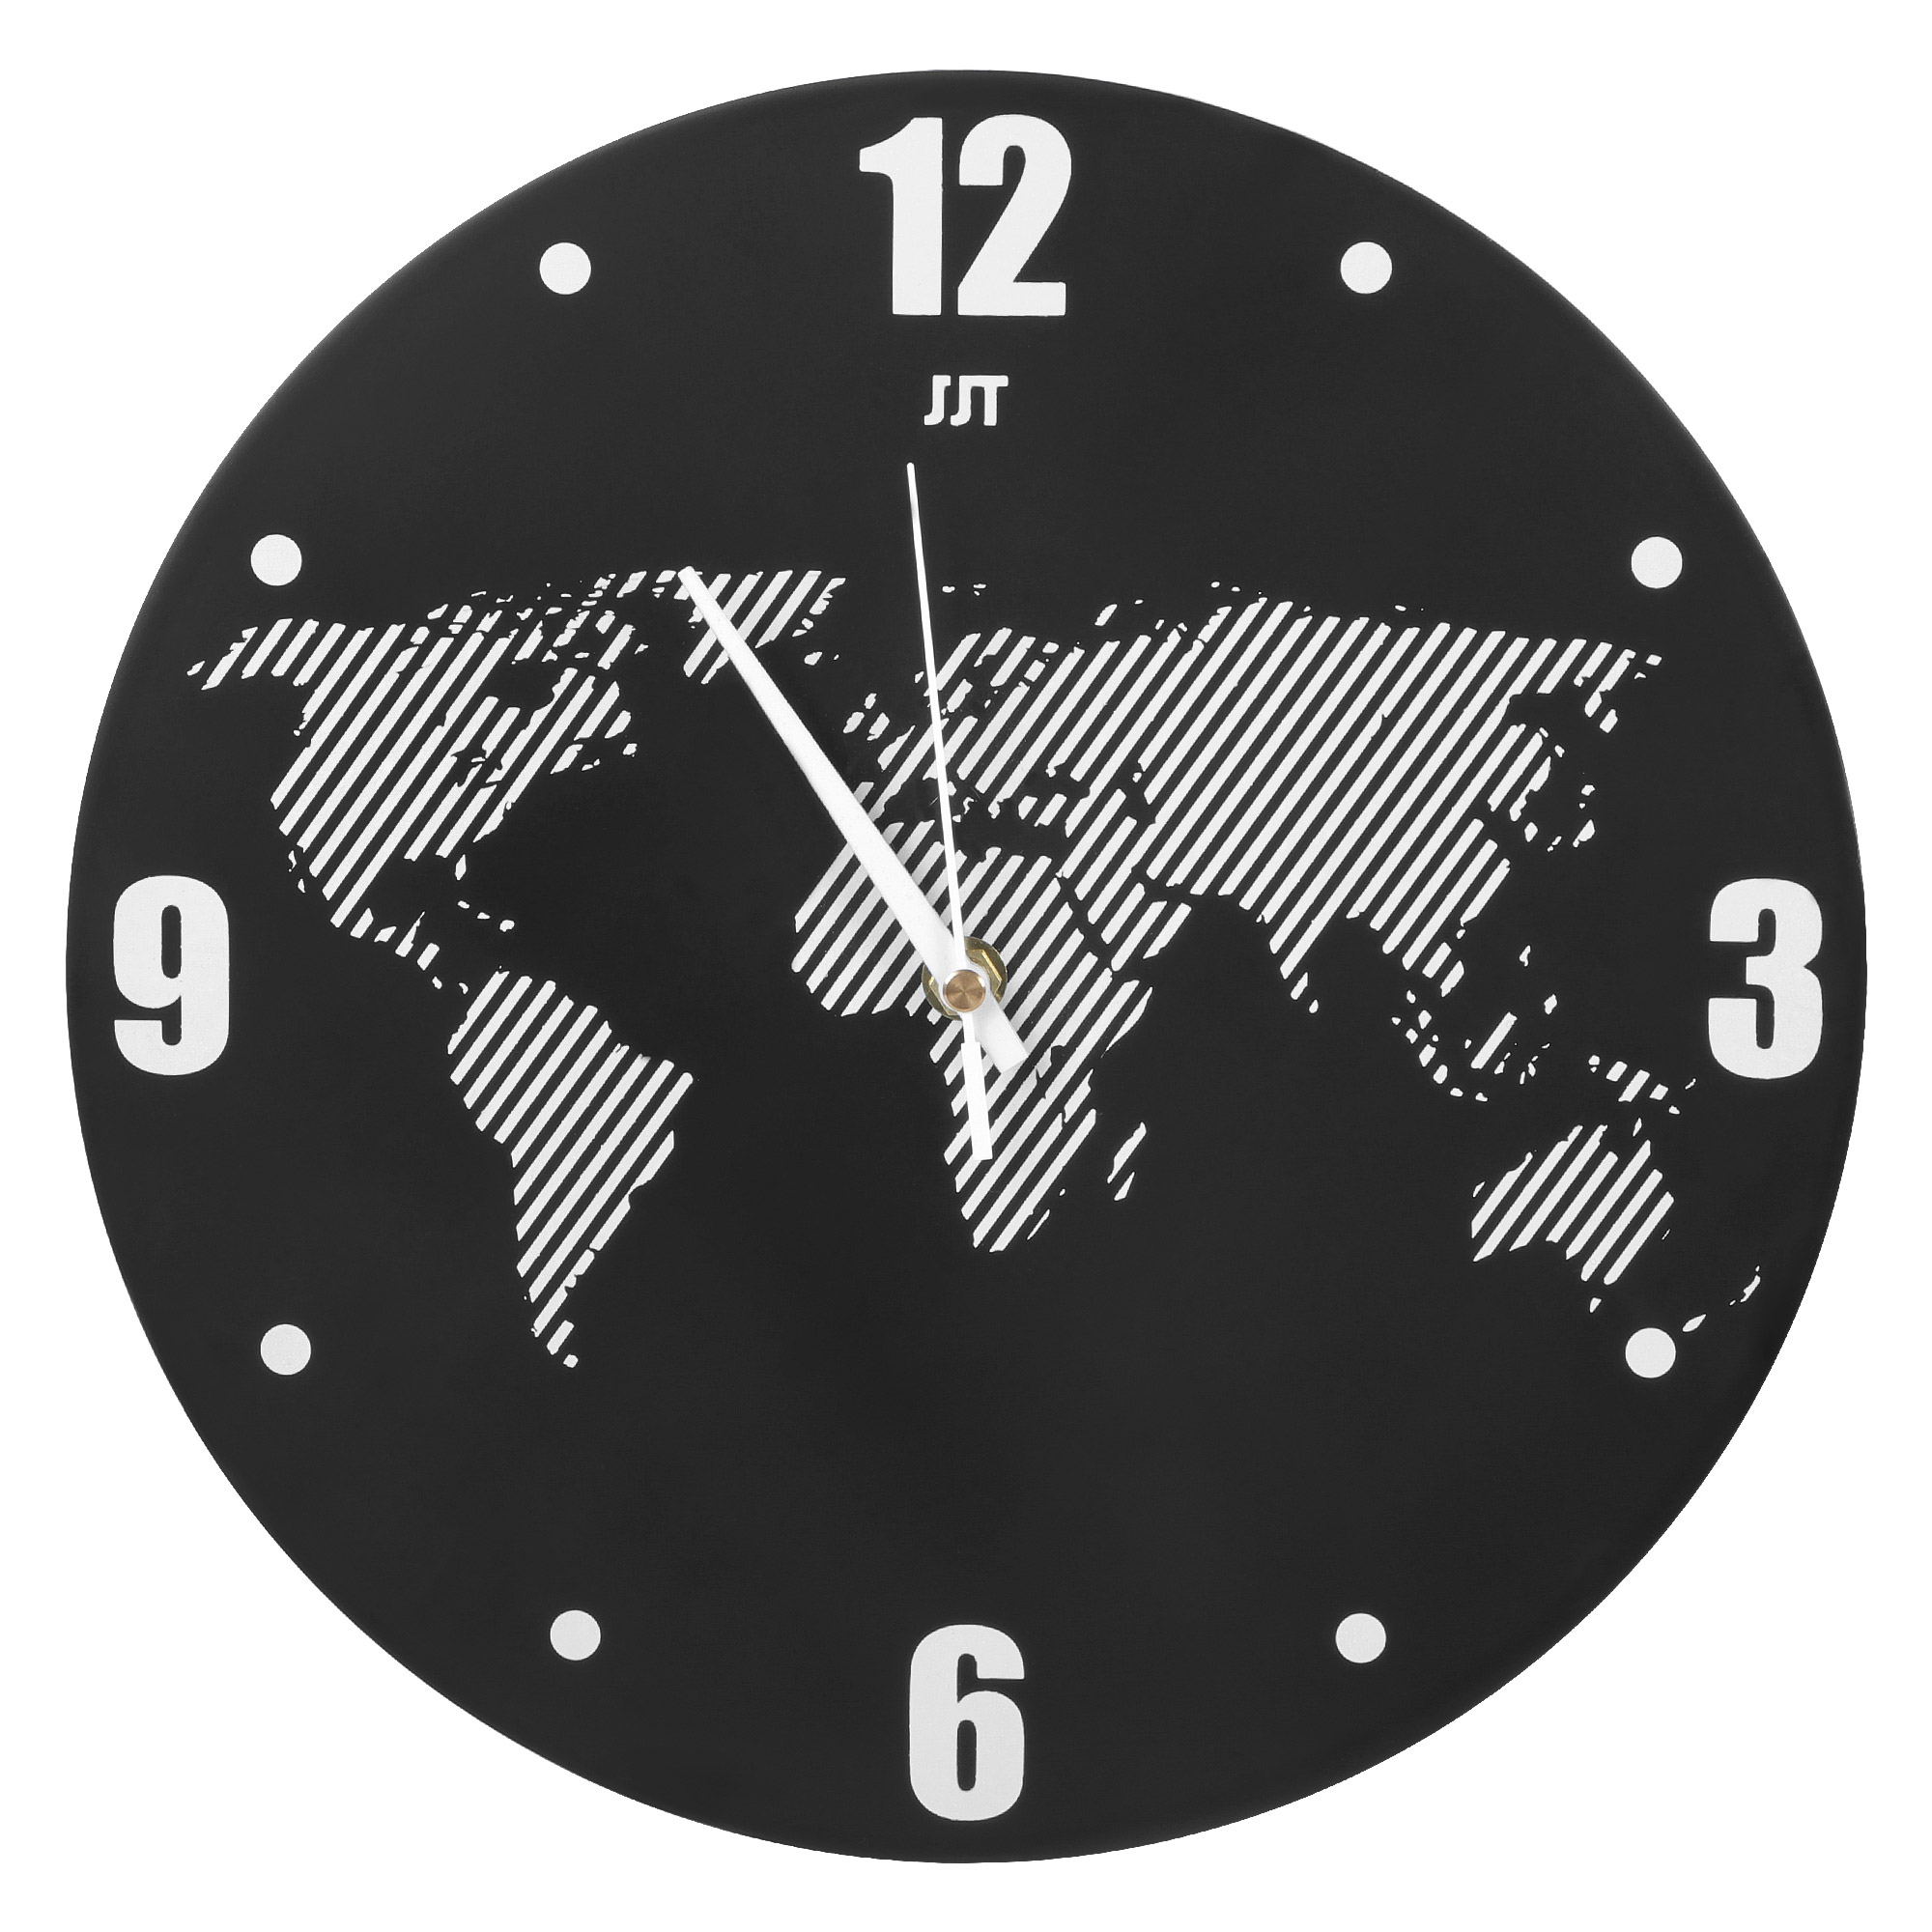 Часы настенные JJT Карта мира 29х29 см часы настенные jjt круг чёрные 50 см